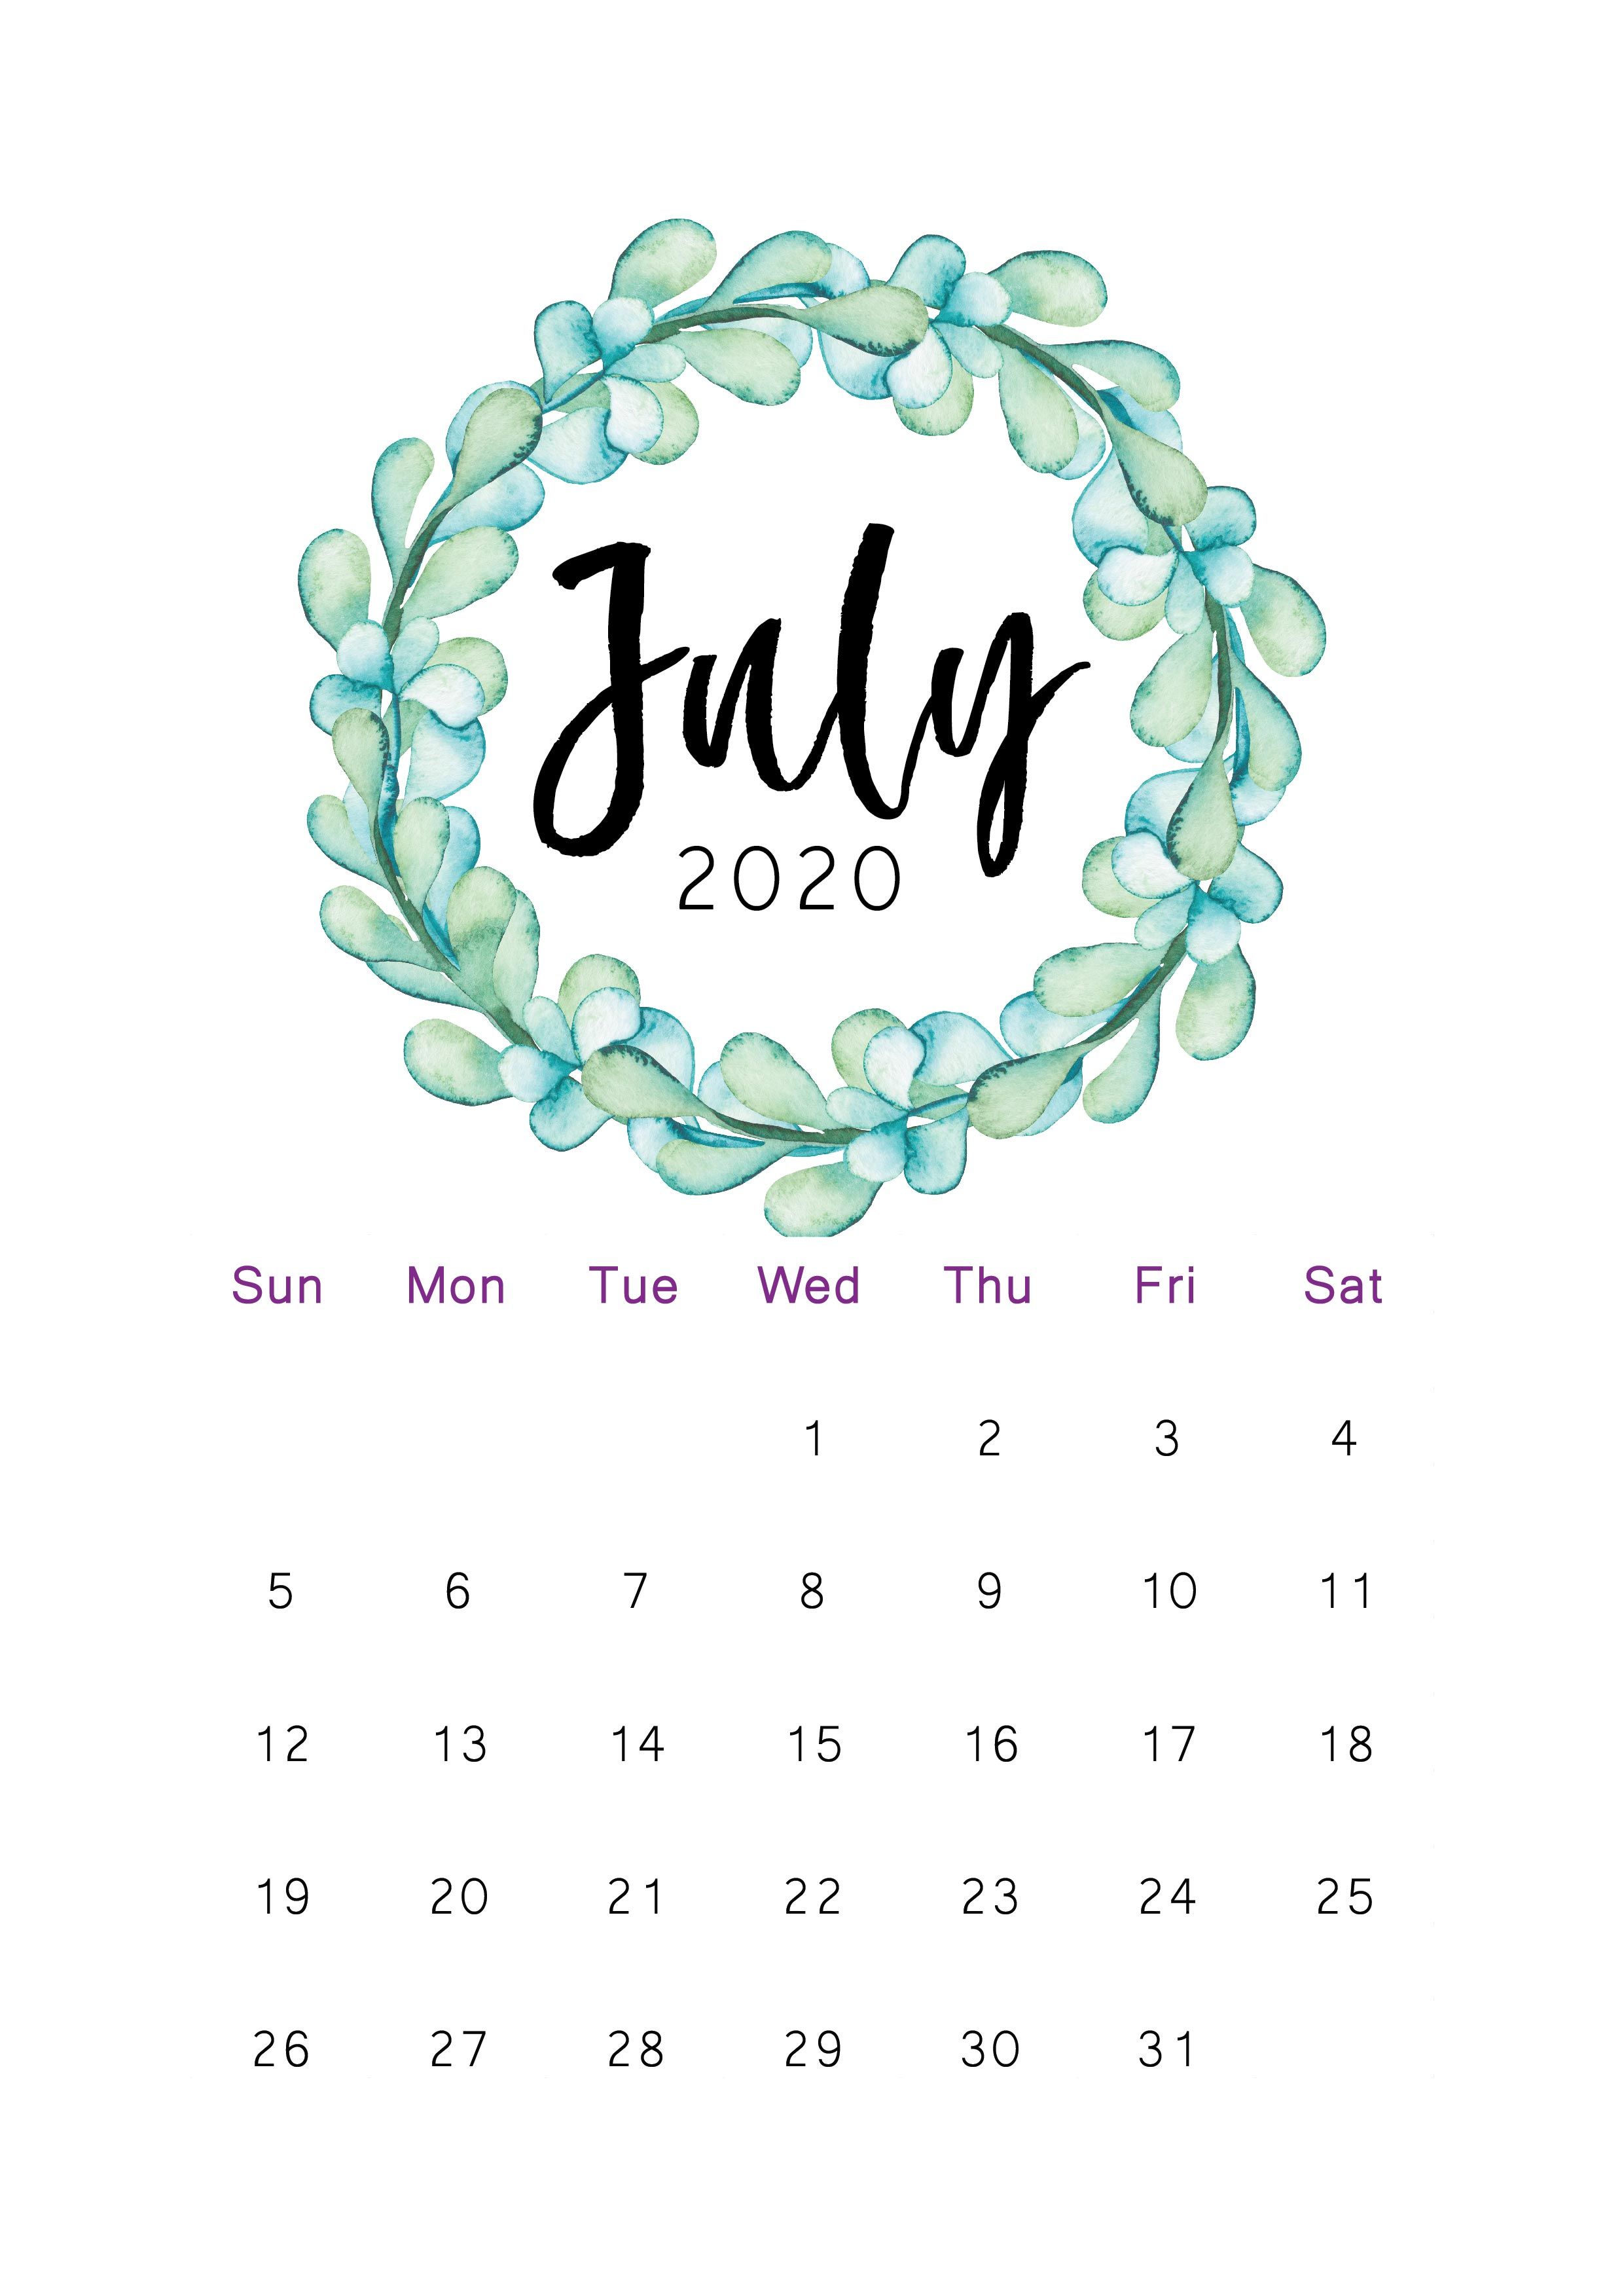 July 2020 Calendar Wallpapers - Wallpaper Cave